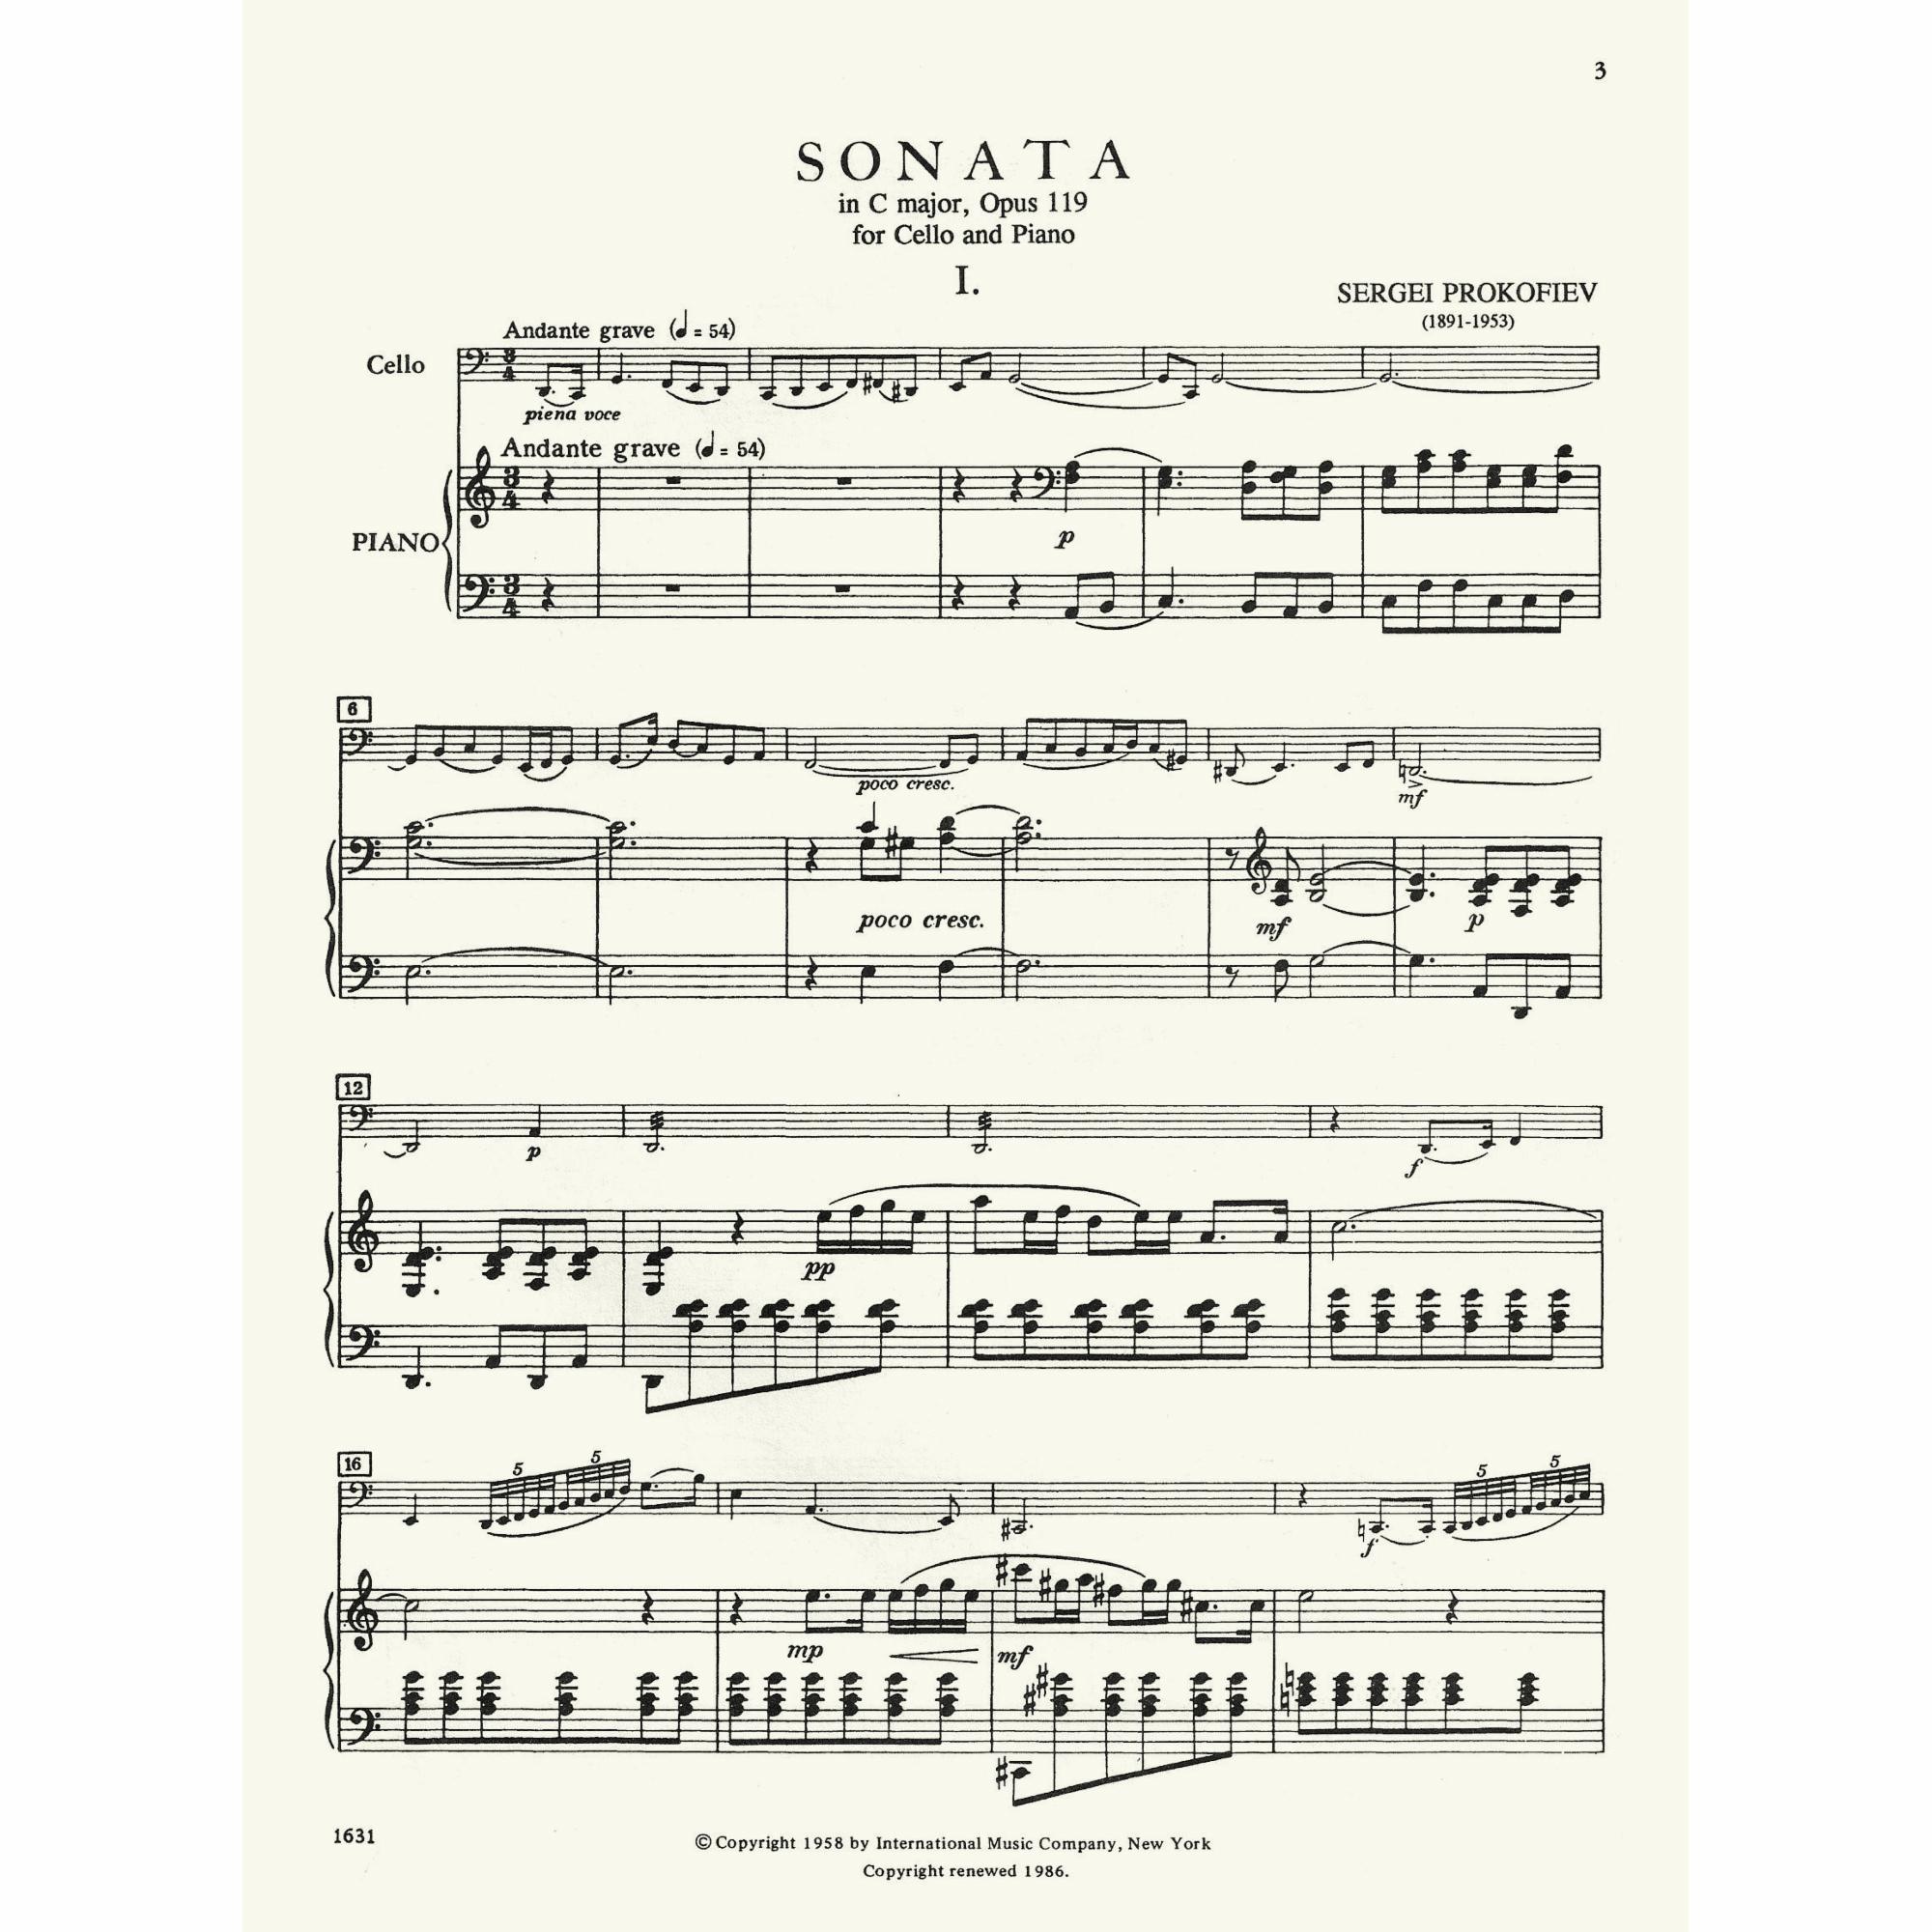 Sample: Piano (Pg. 3)